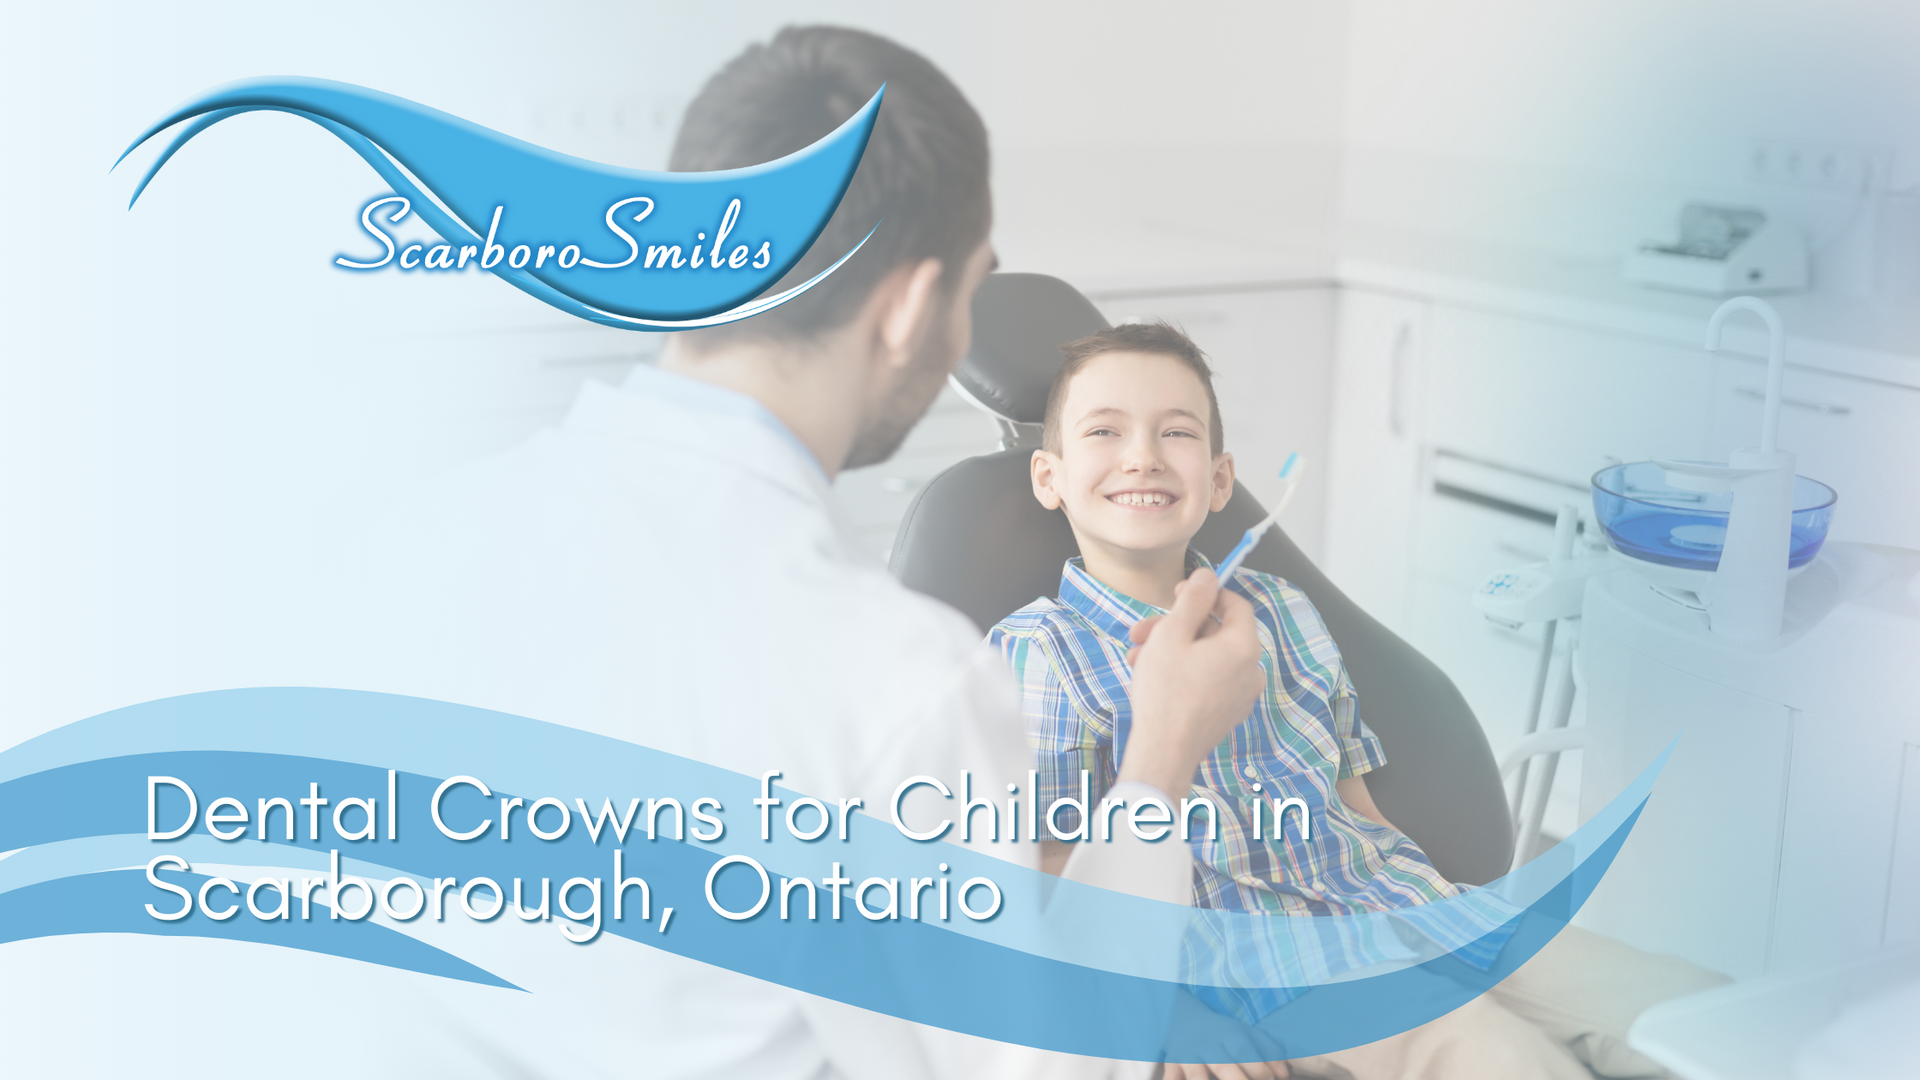 scarboro smiles dental crowns for children in scarborough ontario